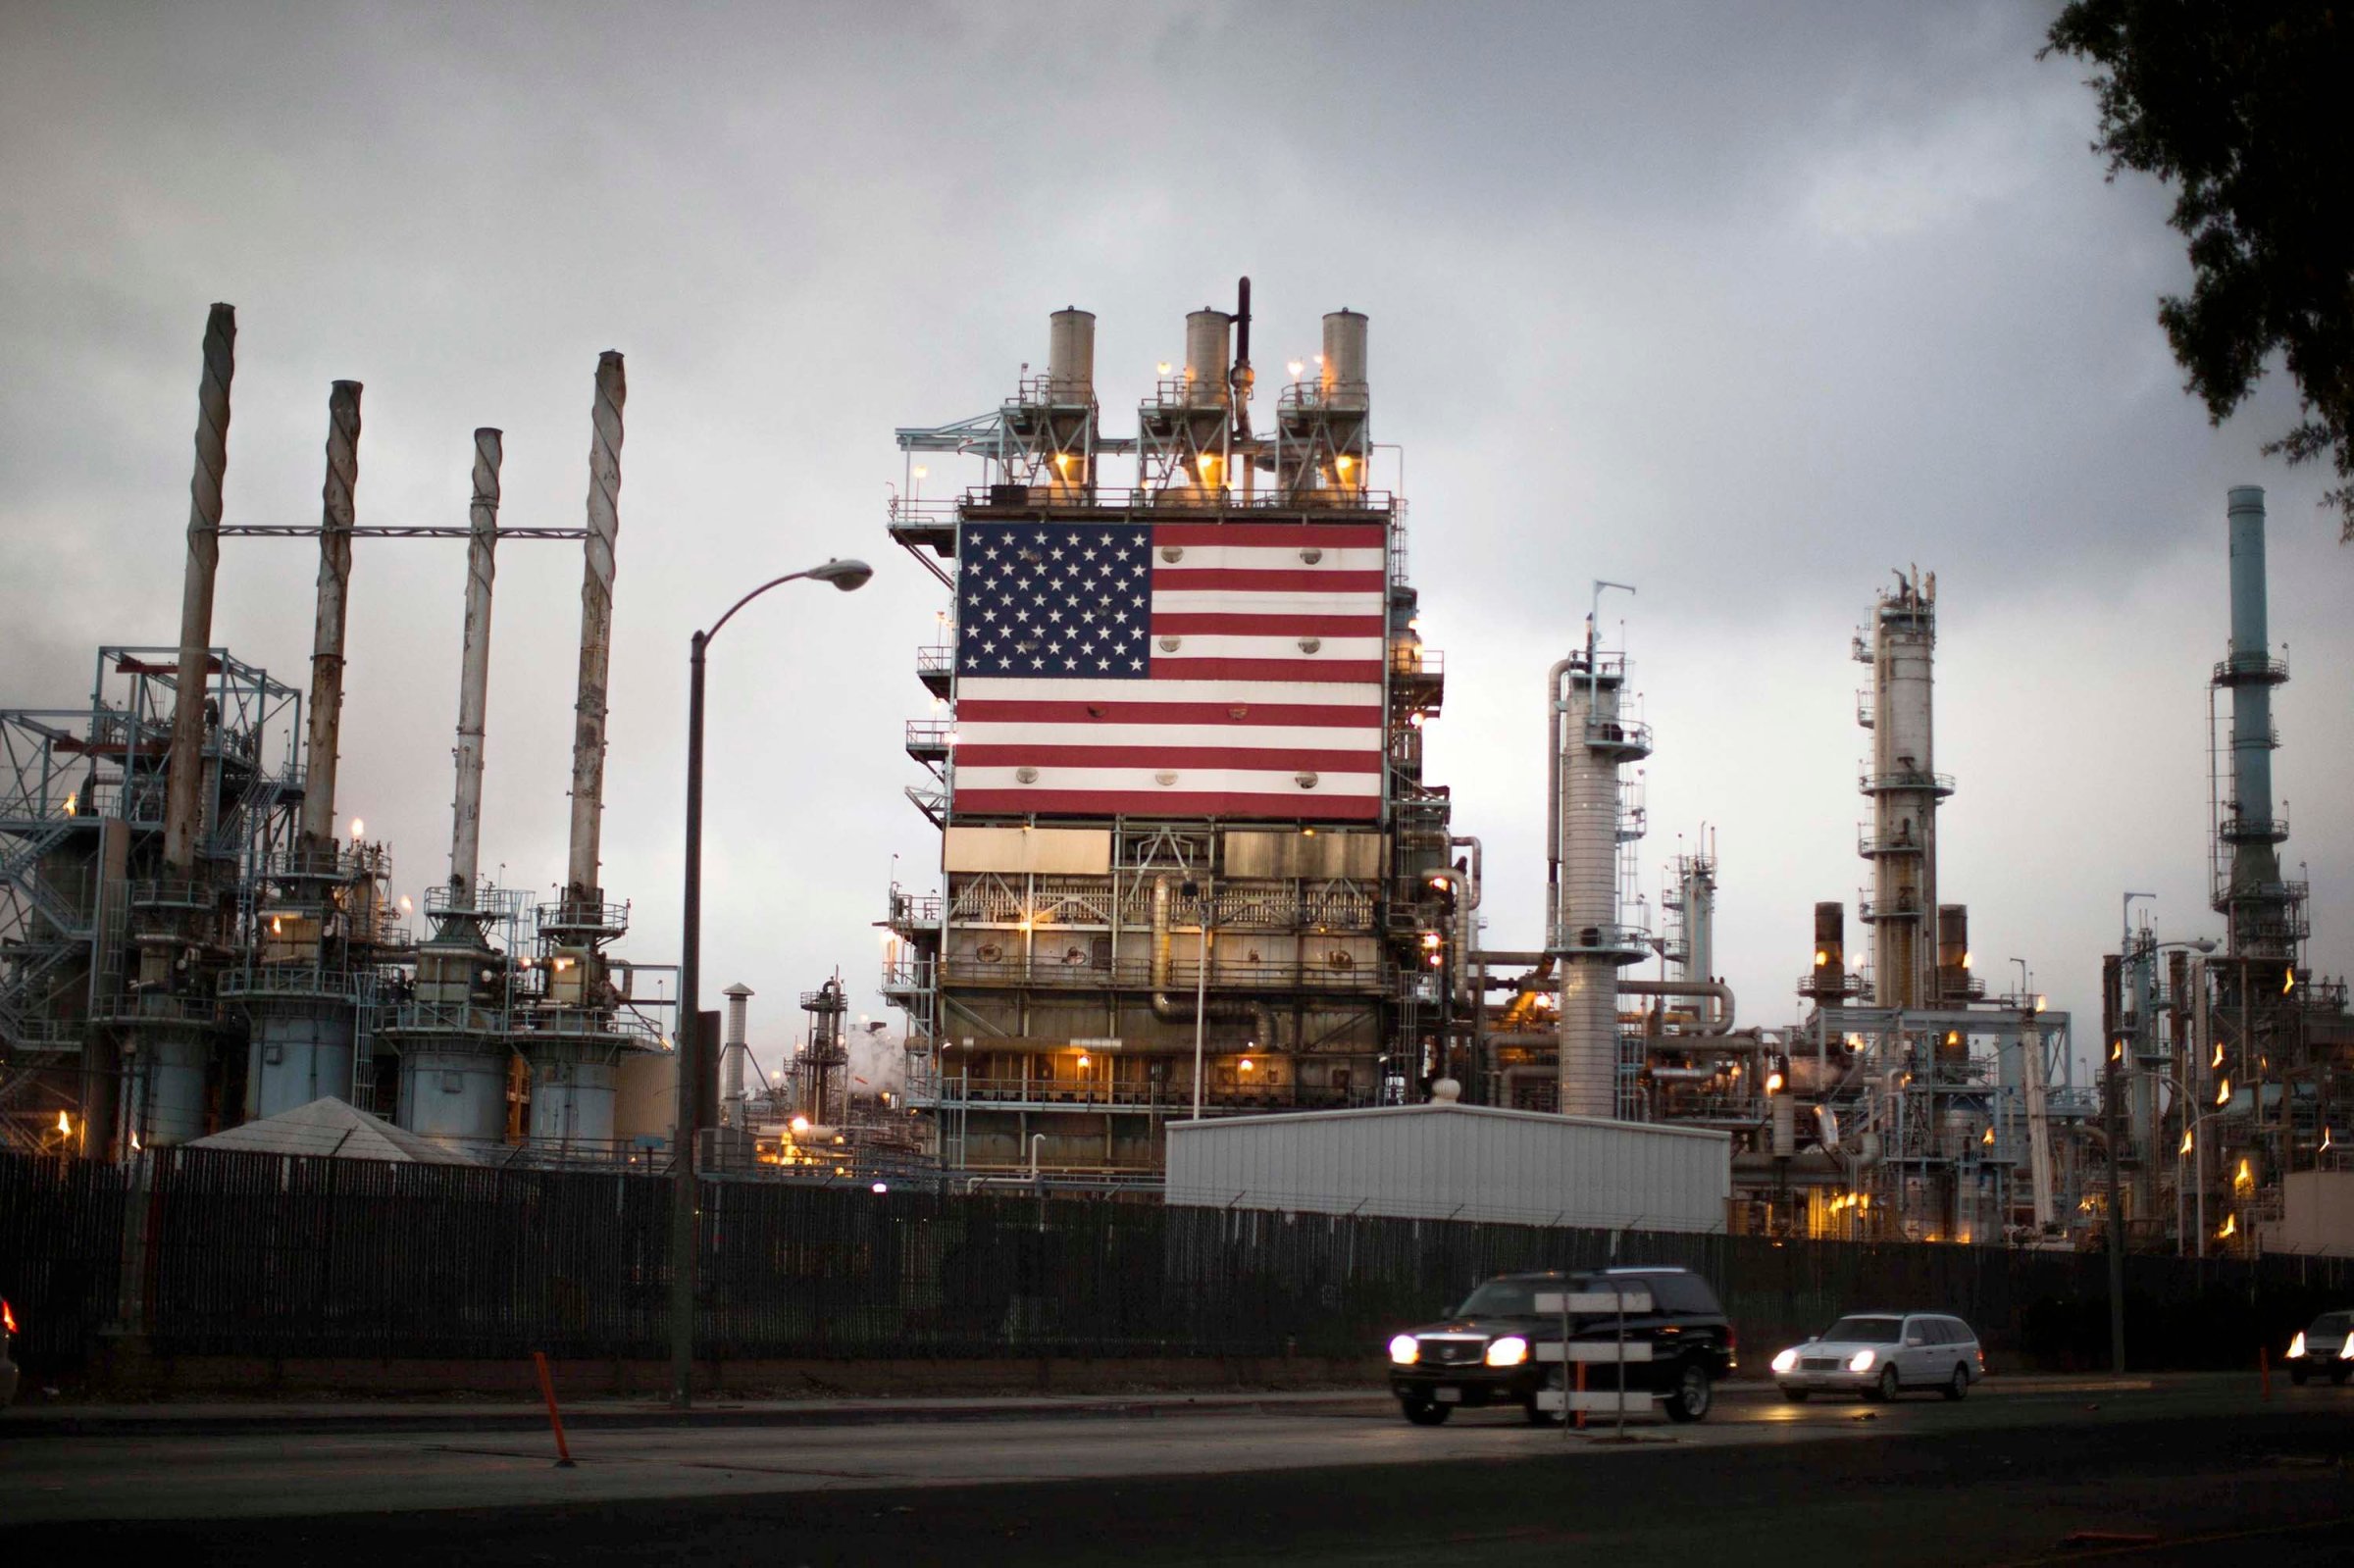 TeThe U.S. flag is displayed at Tesoro's Los Angeles oil refinery in Los Angeles, California